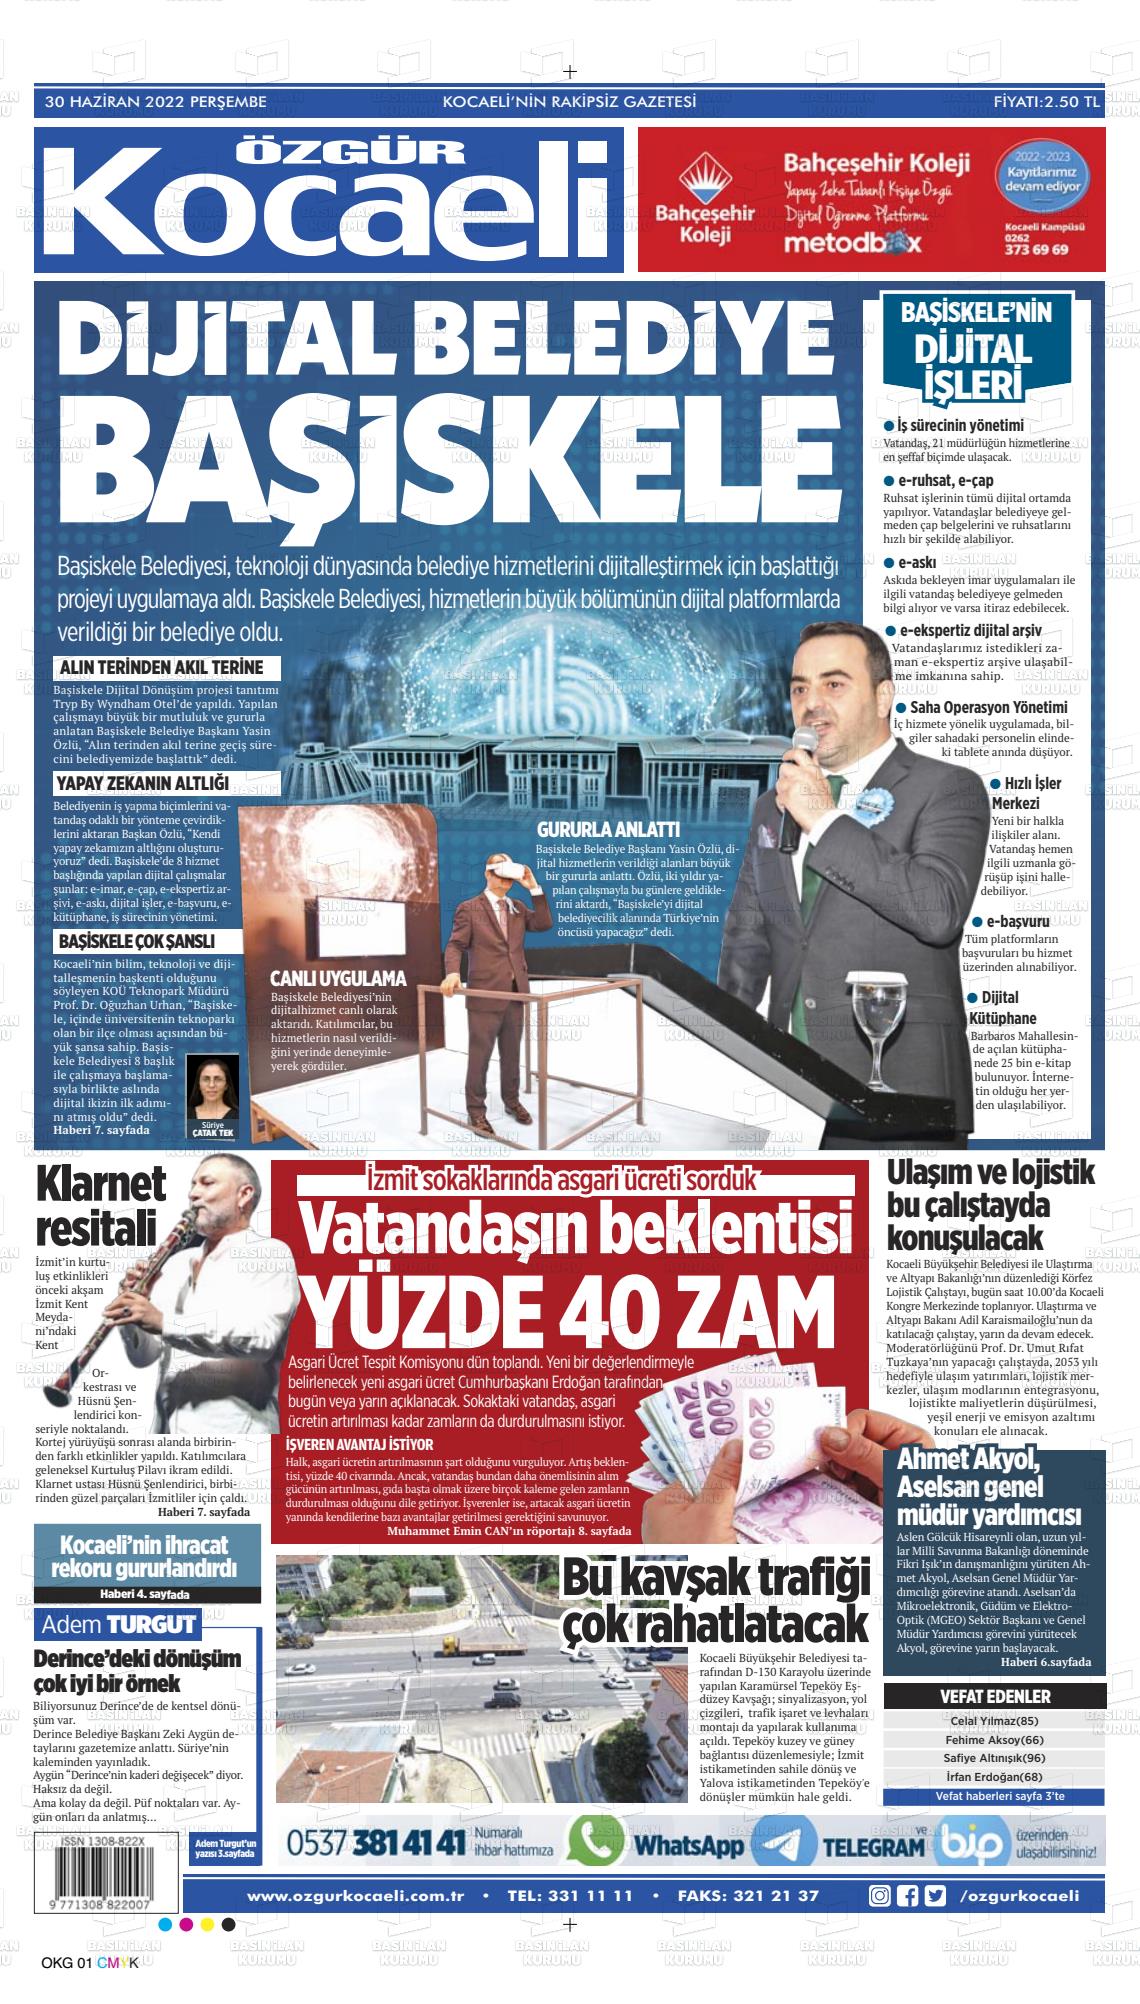 30 Haziran 2022 Özgür Kocaeli Gazete Manşeti